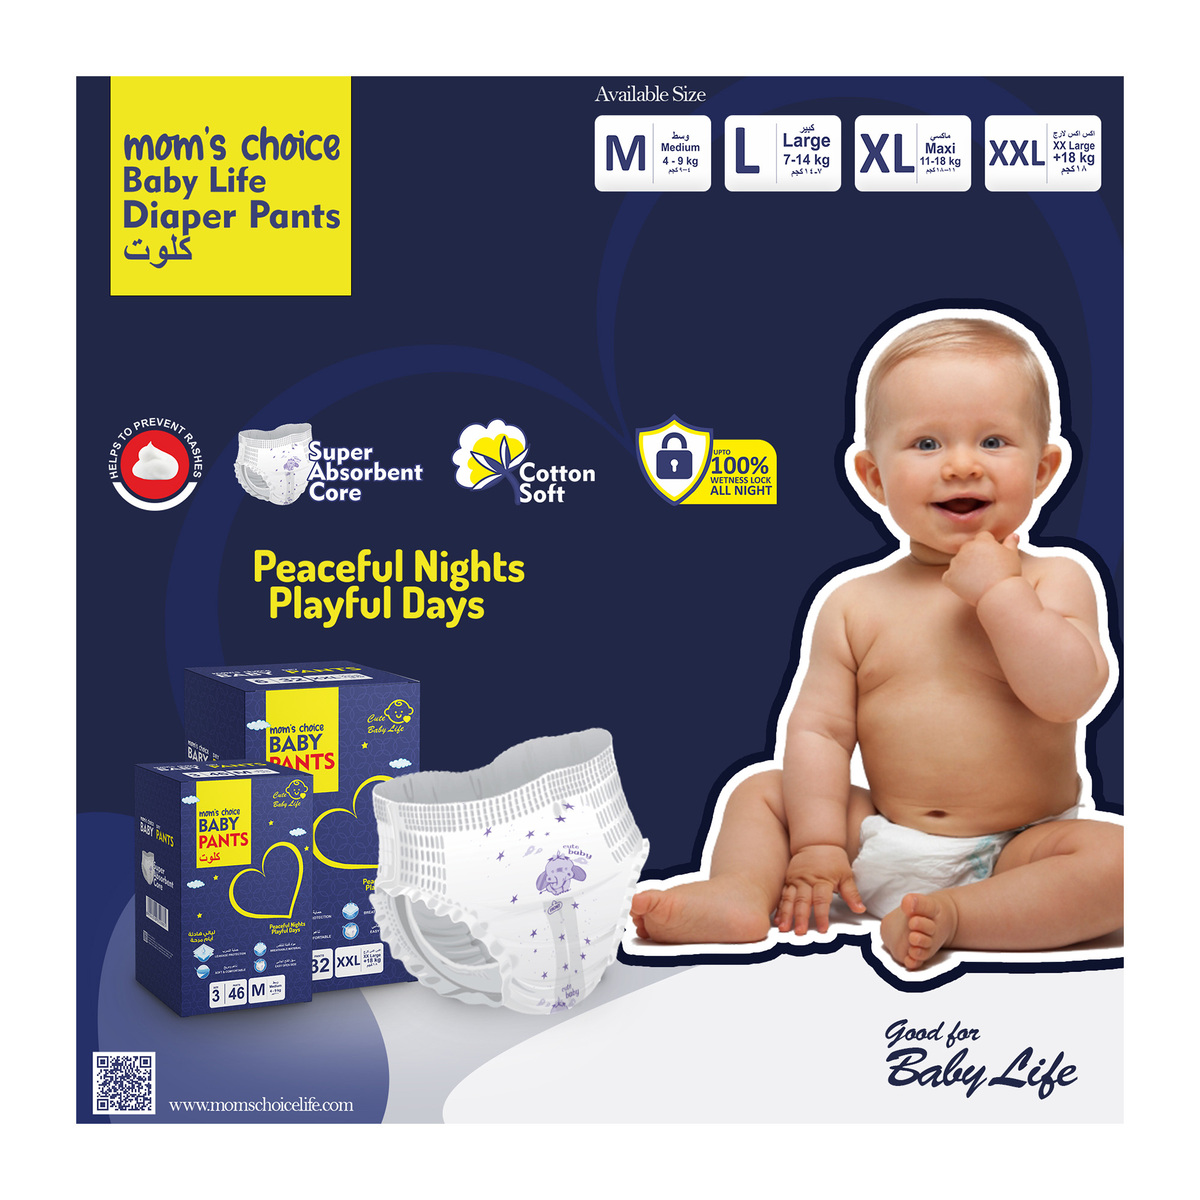 Baby Life Diaper Pants Size 3 Medium 4-9kg 46 pcs